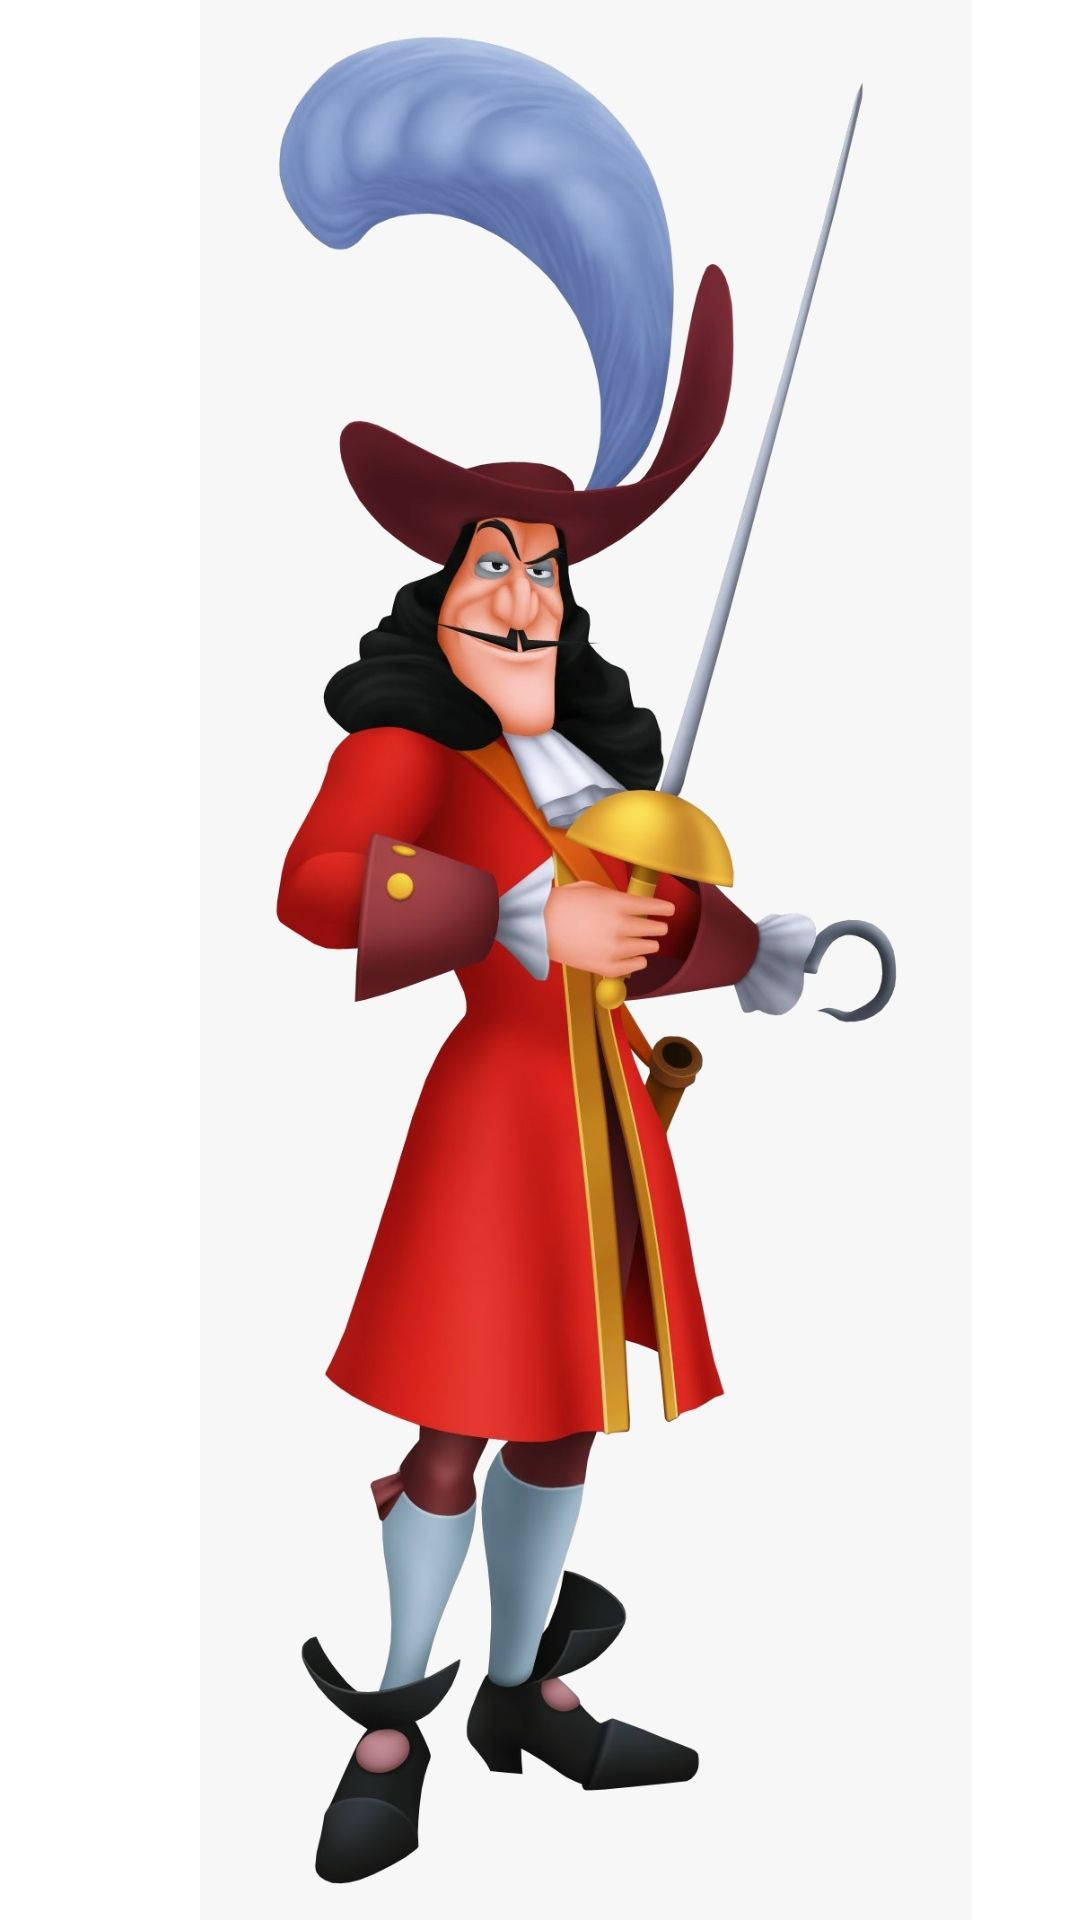 Pirate Captain Hook